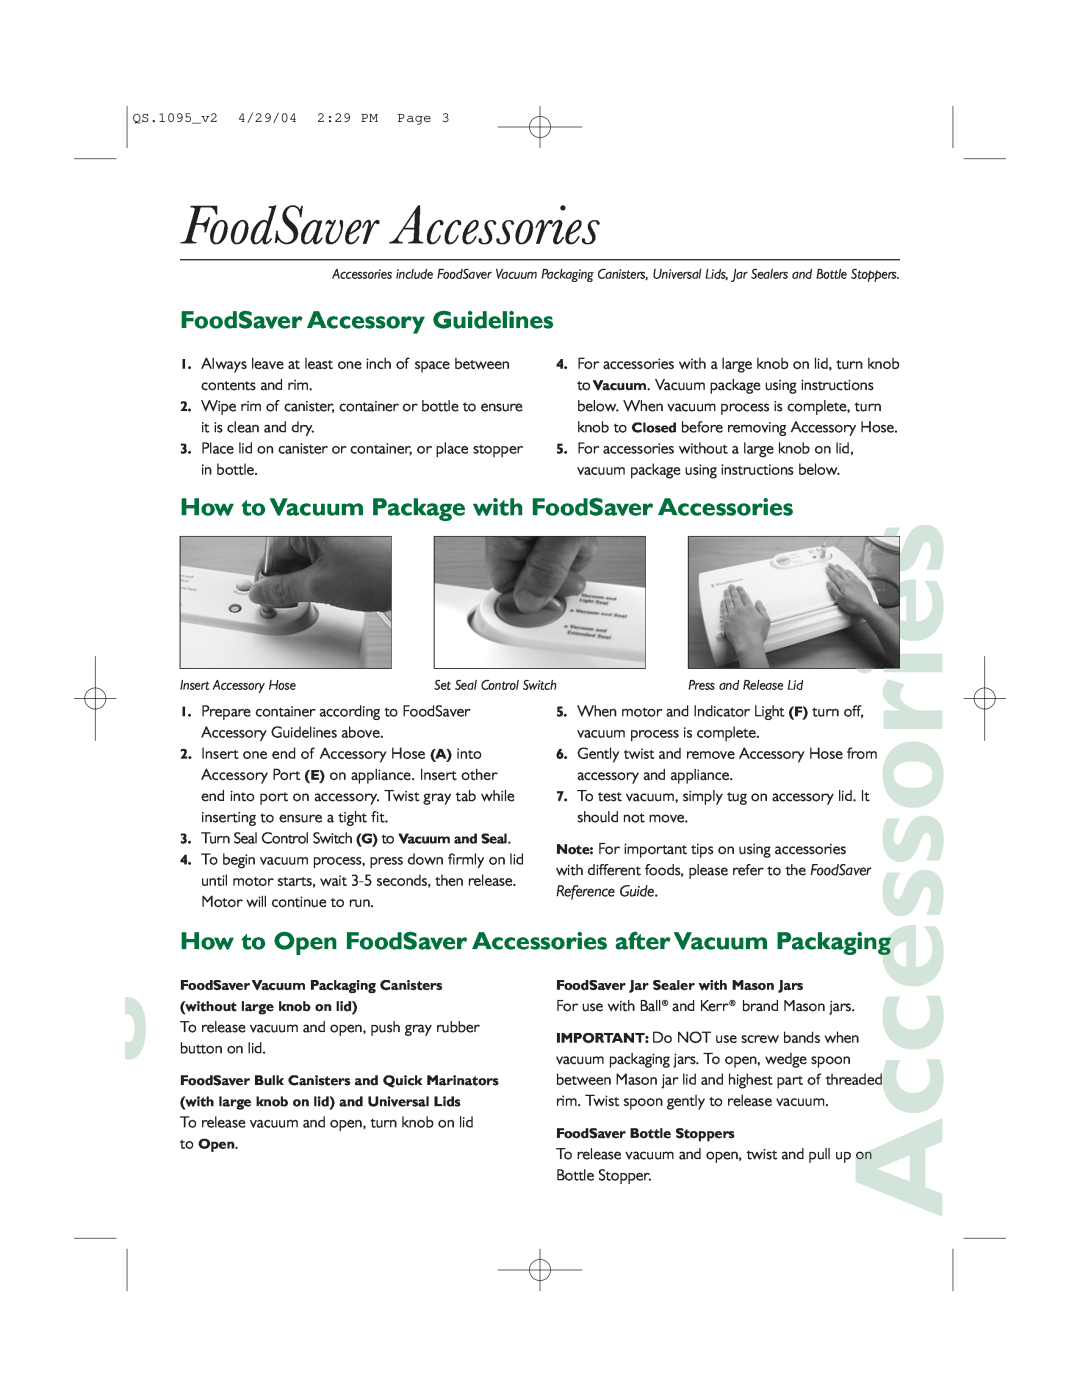 FoodSaver V1095 quick start FoodSaver Accessories, FoodSaver Accessory Guidelines 